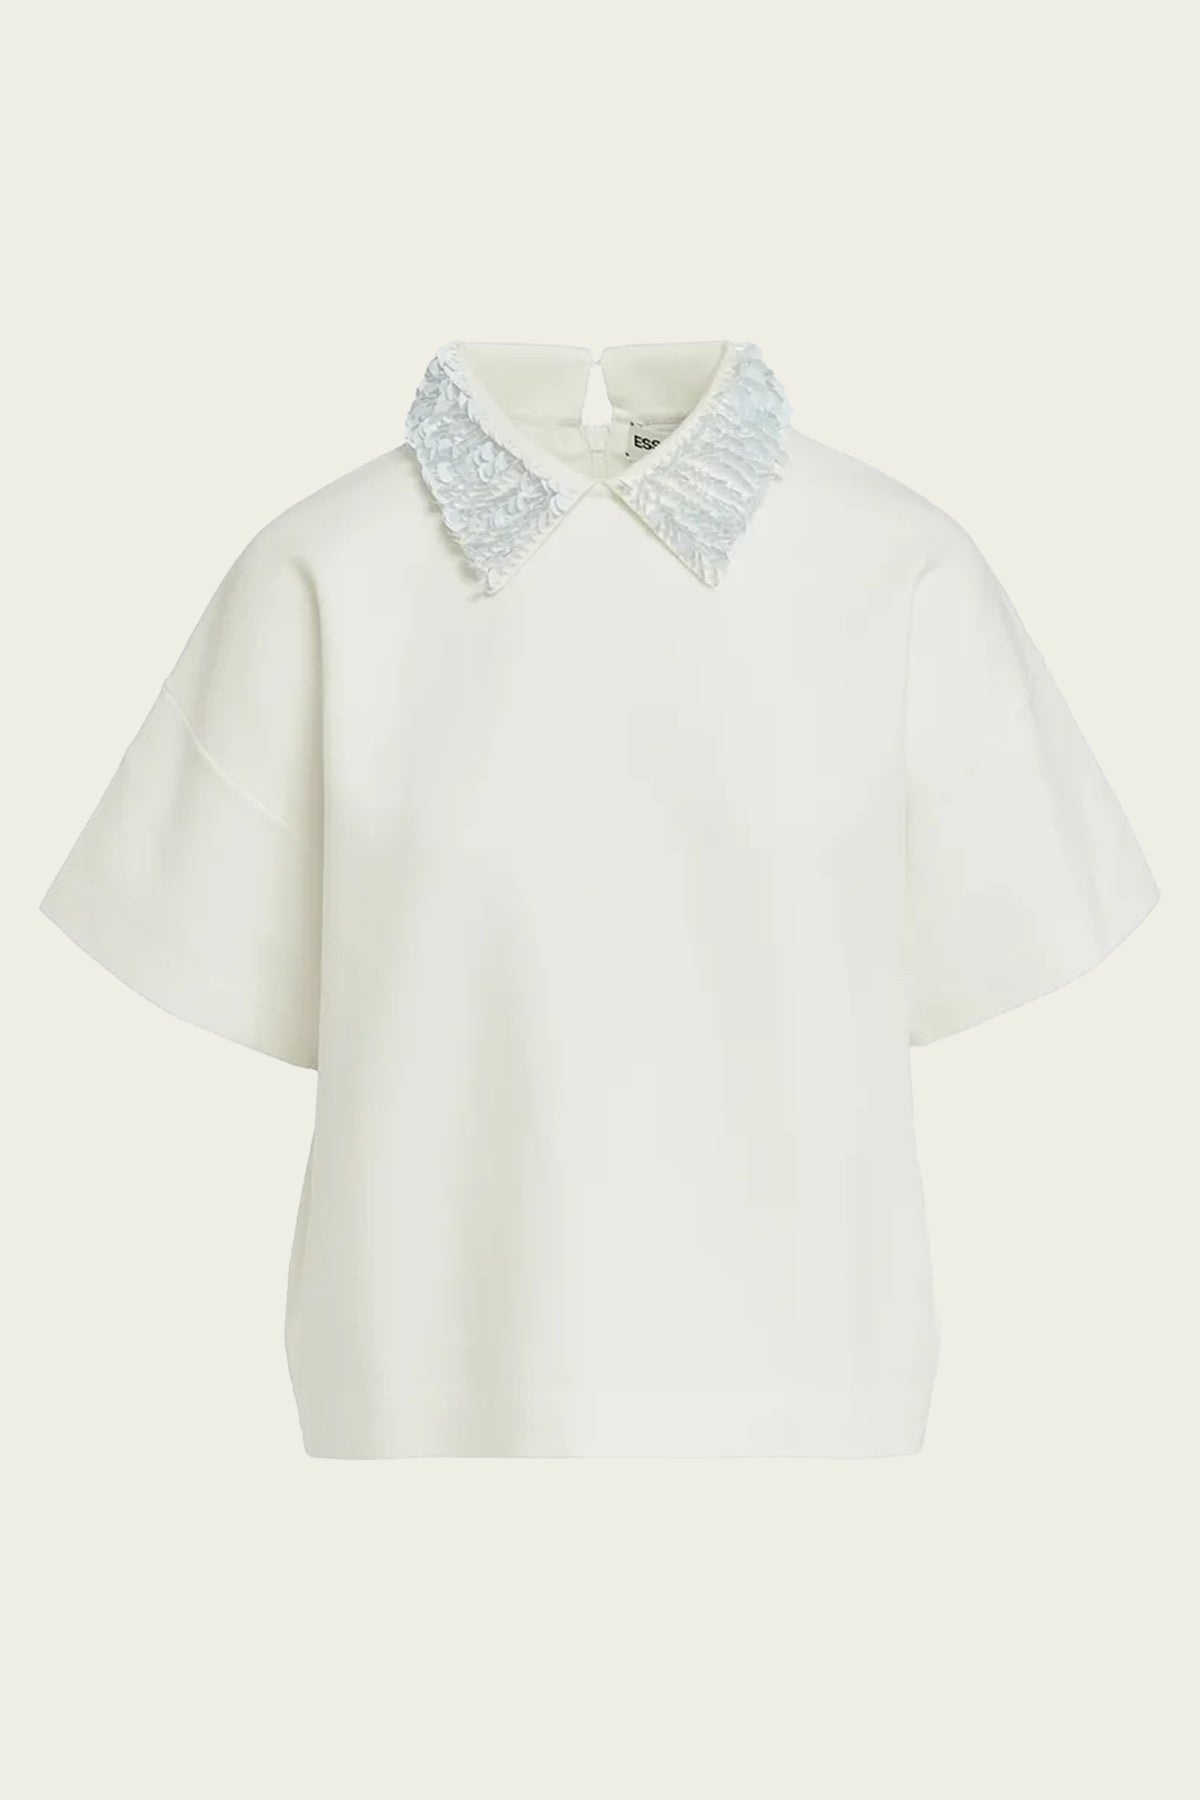 Filano Sequin - Embellished Collar in Off - White - shop - olivia.com